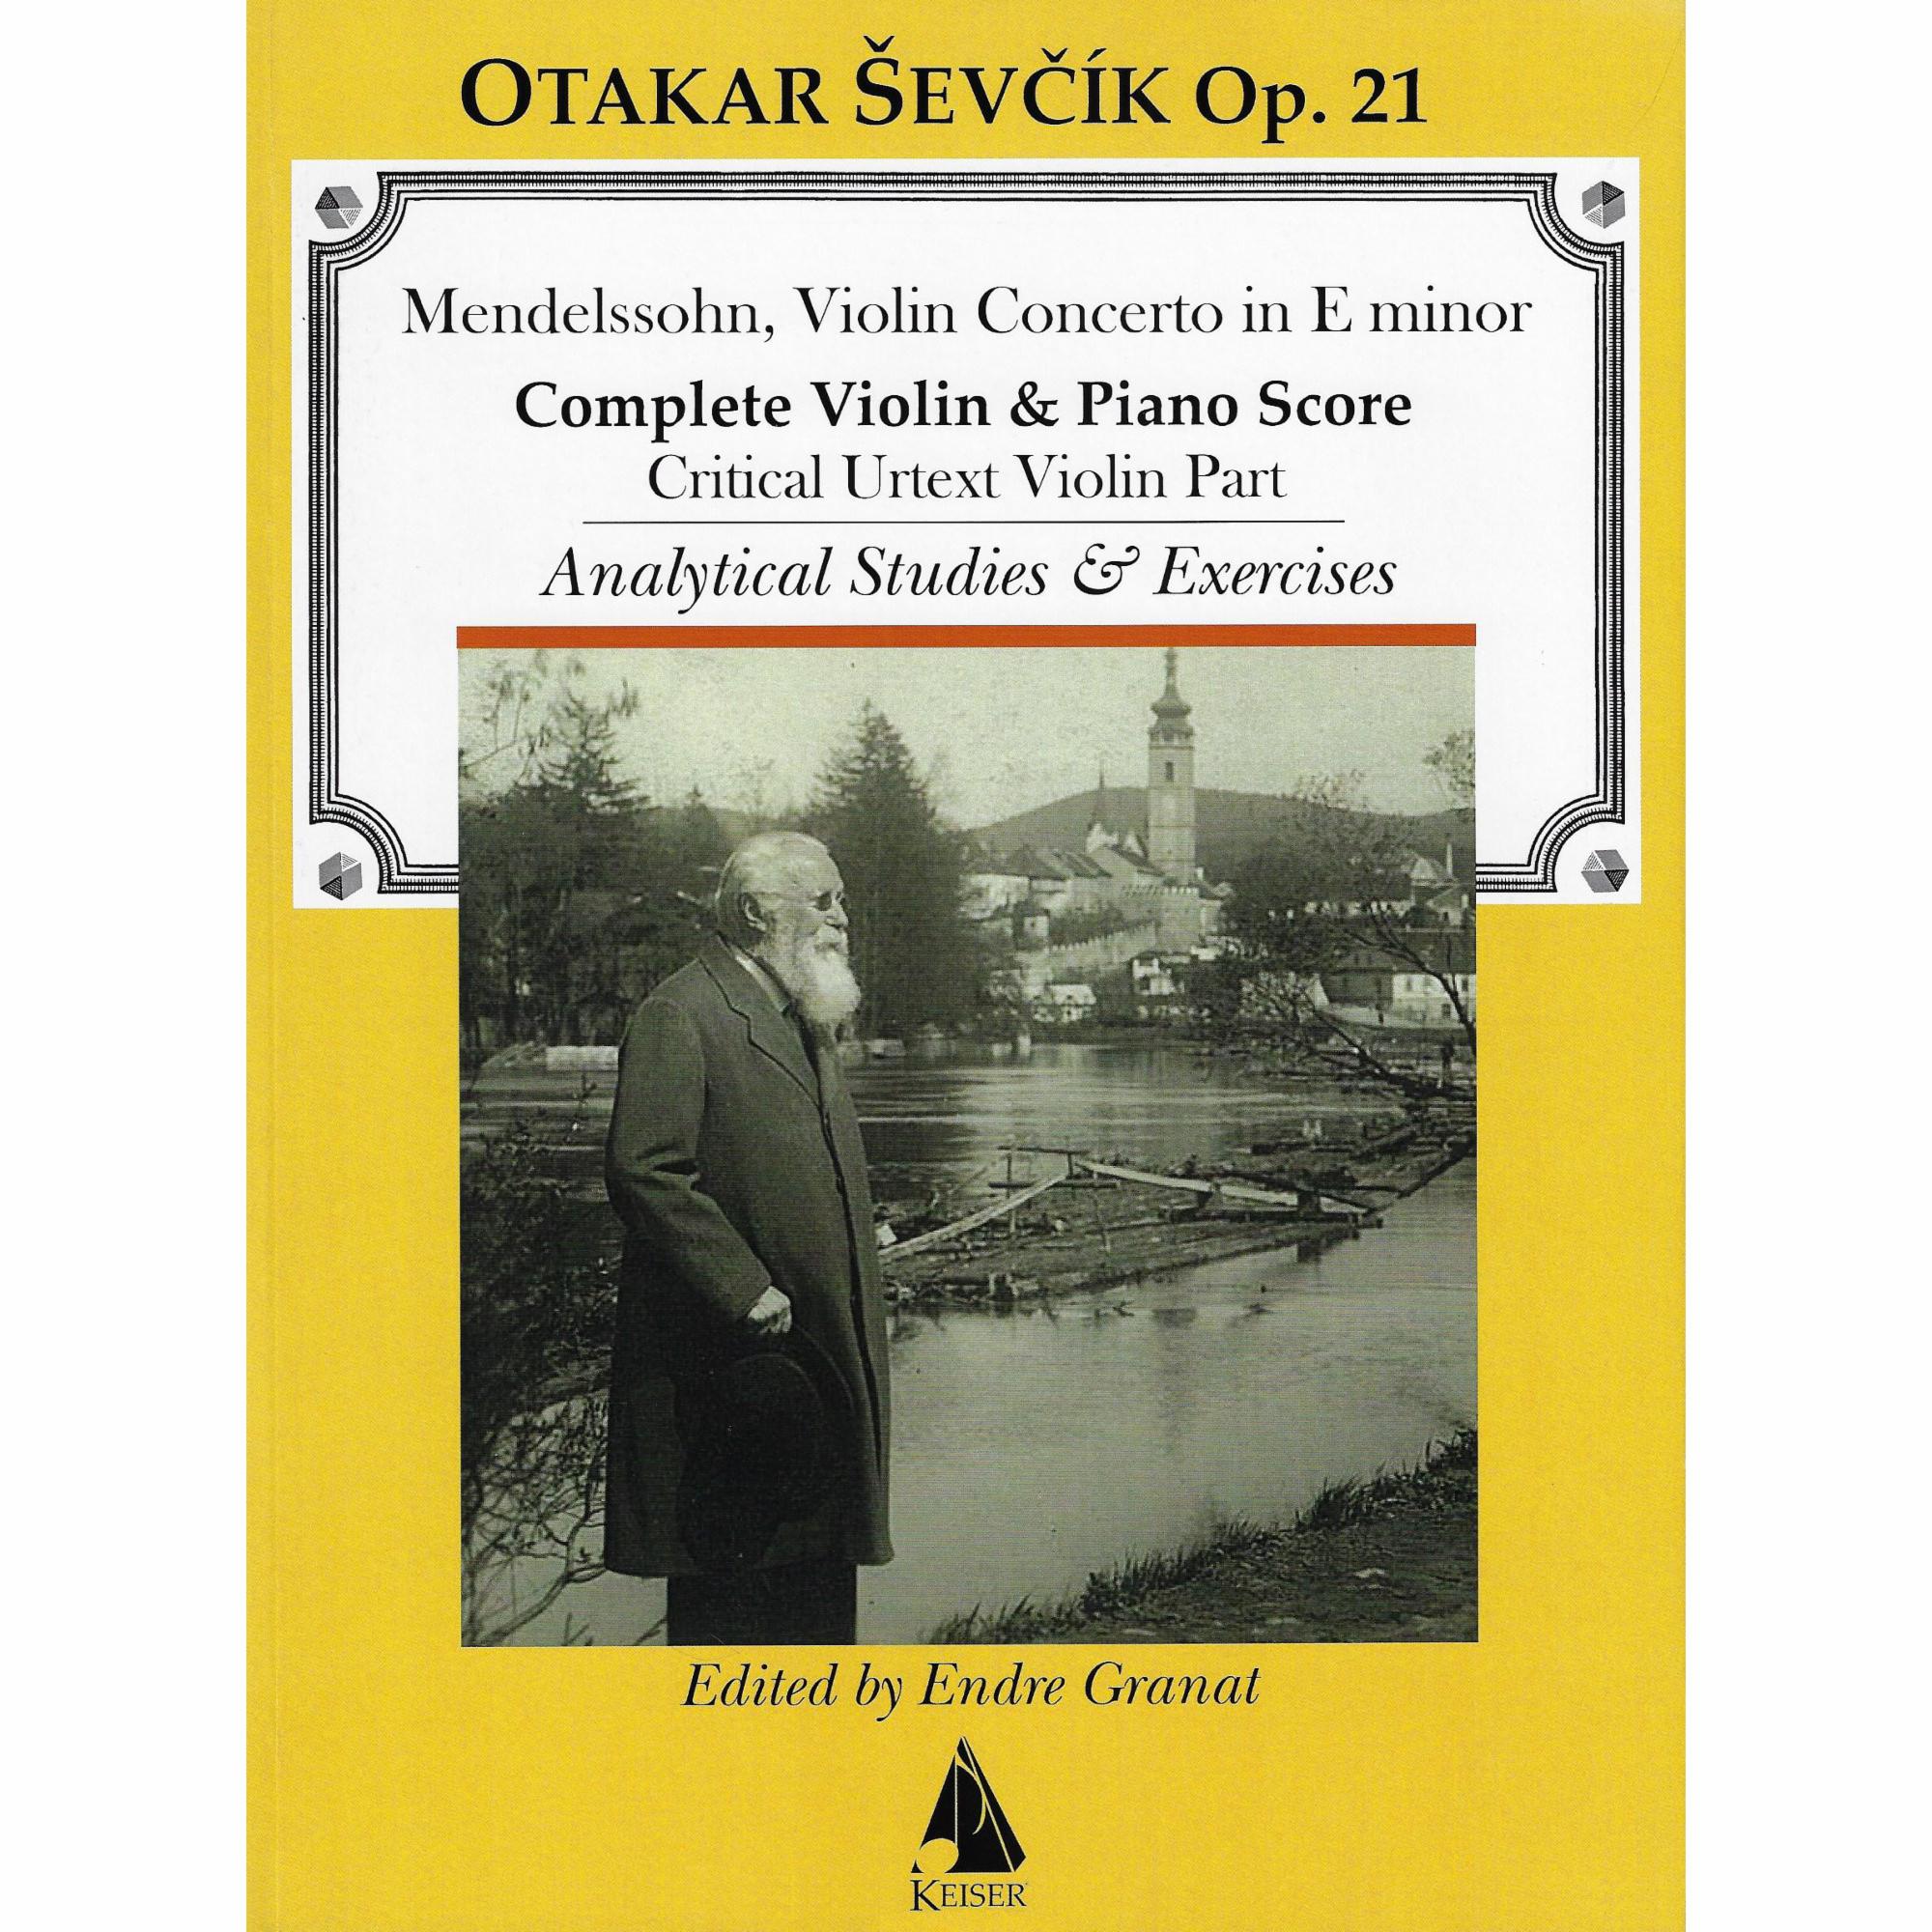 Sevcik -- Analytical Studies & Exercises, Op. 21 (after Mendelssohn Violin Concerto)